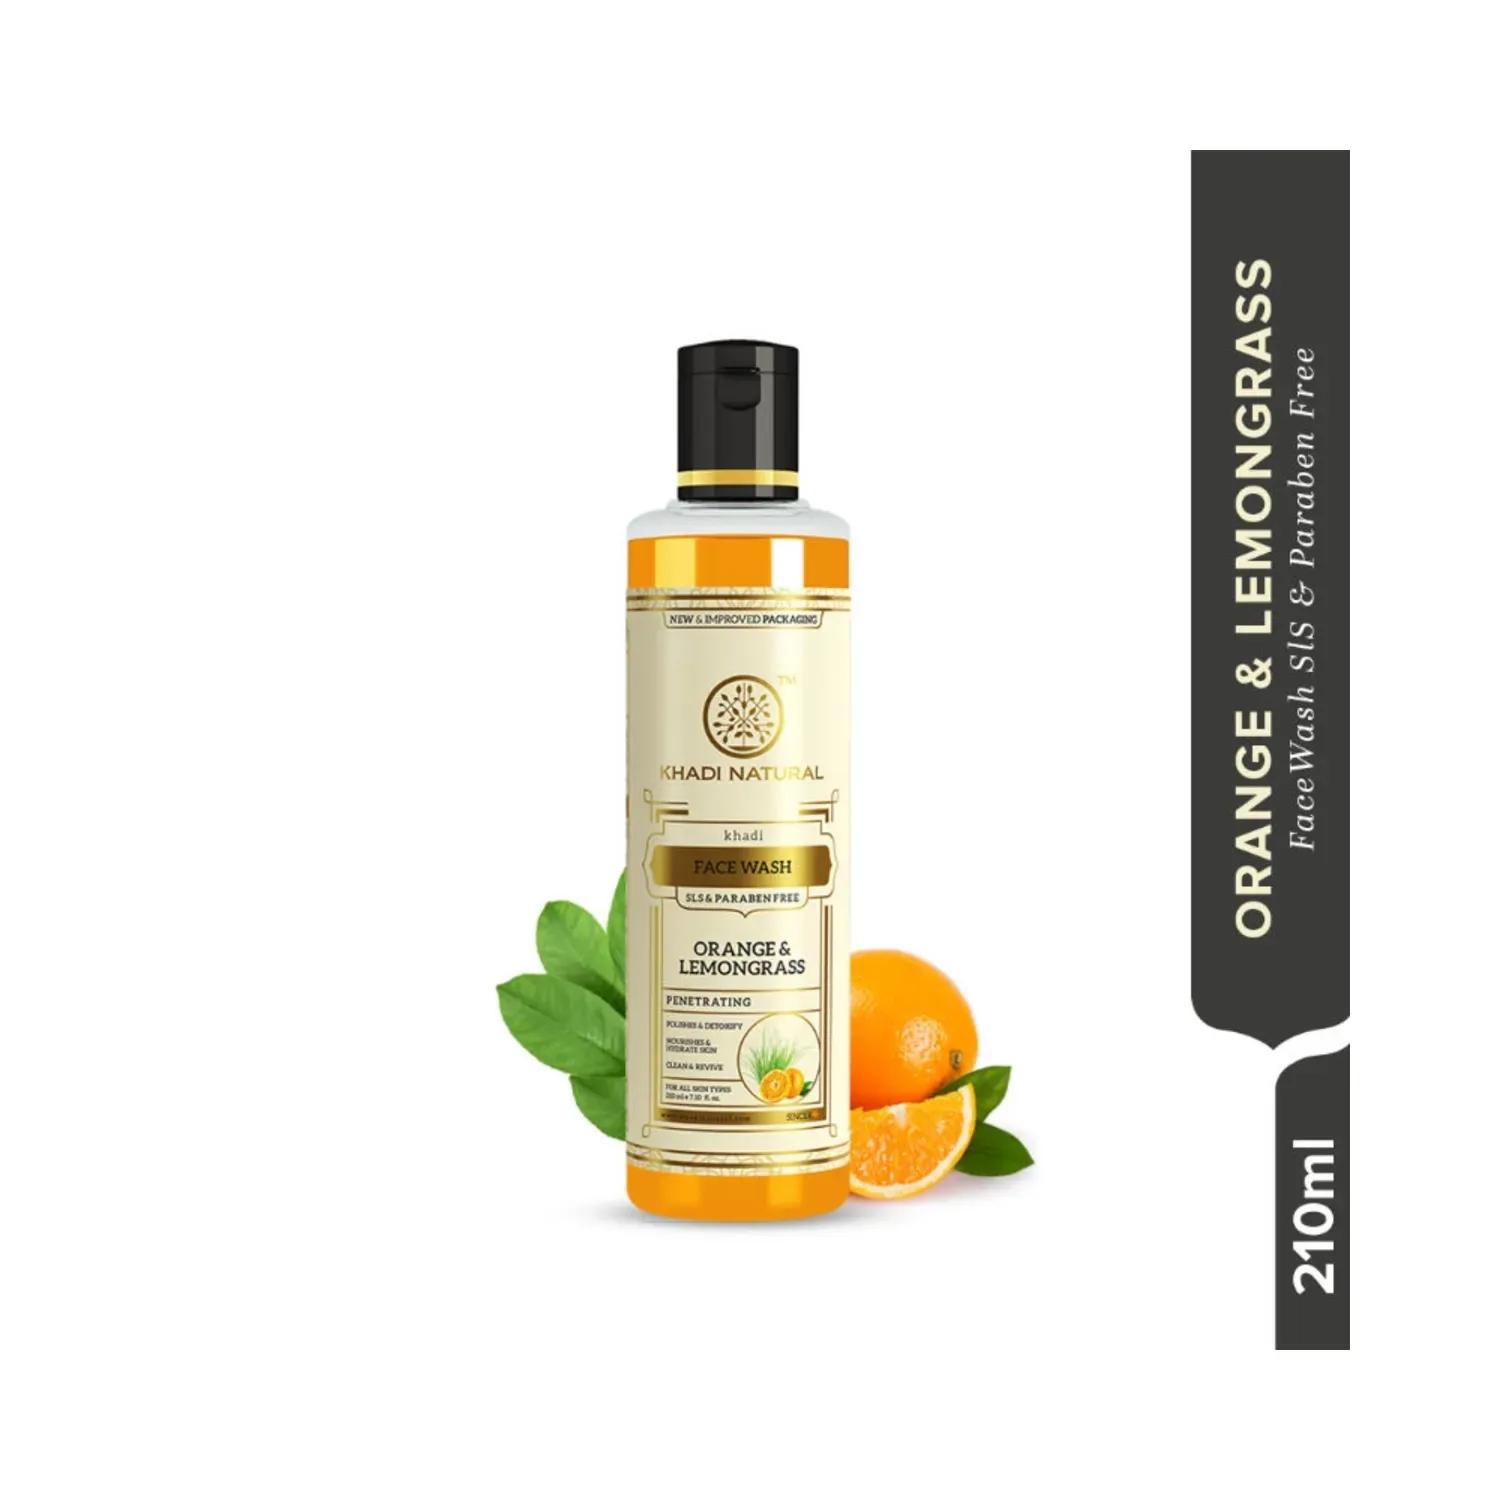 khadi natural orange & lemongrass face wash (210ml)